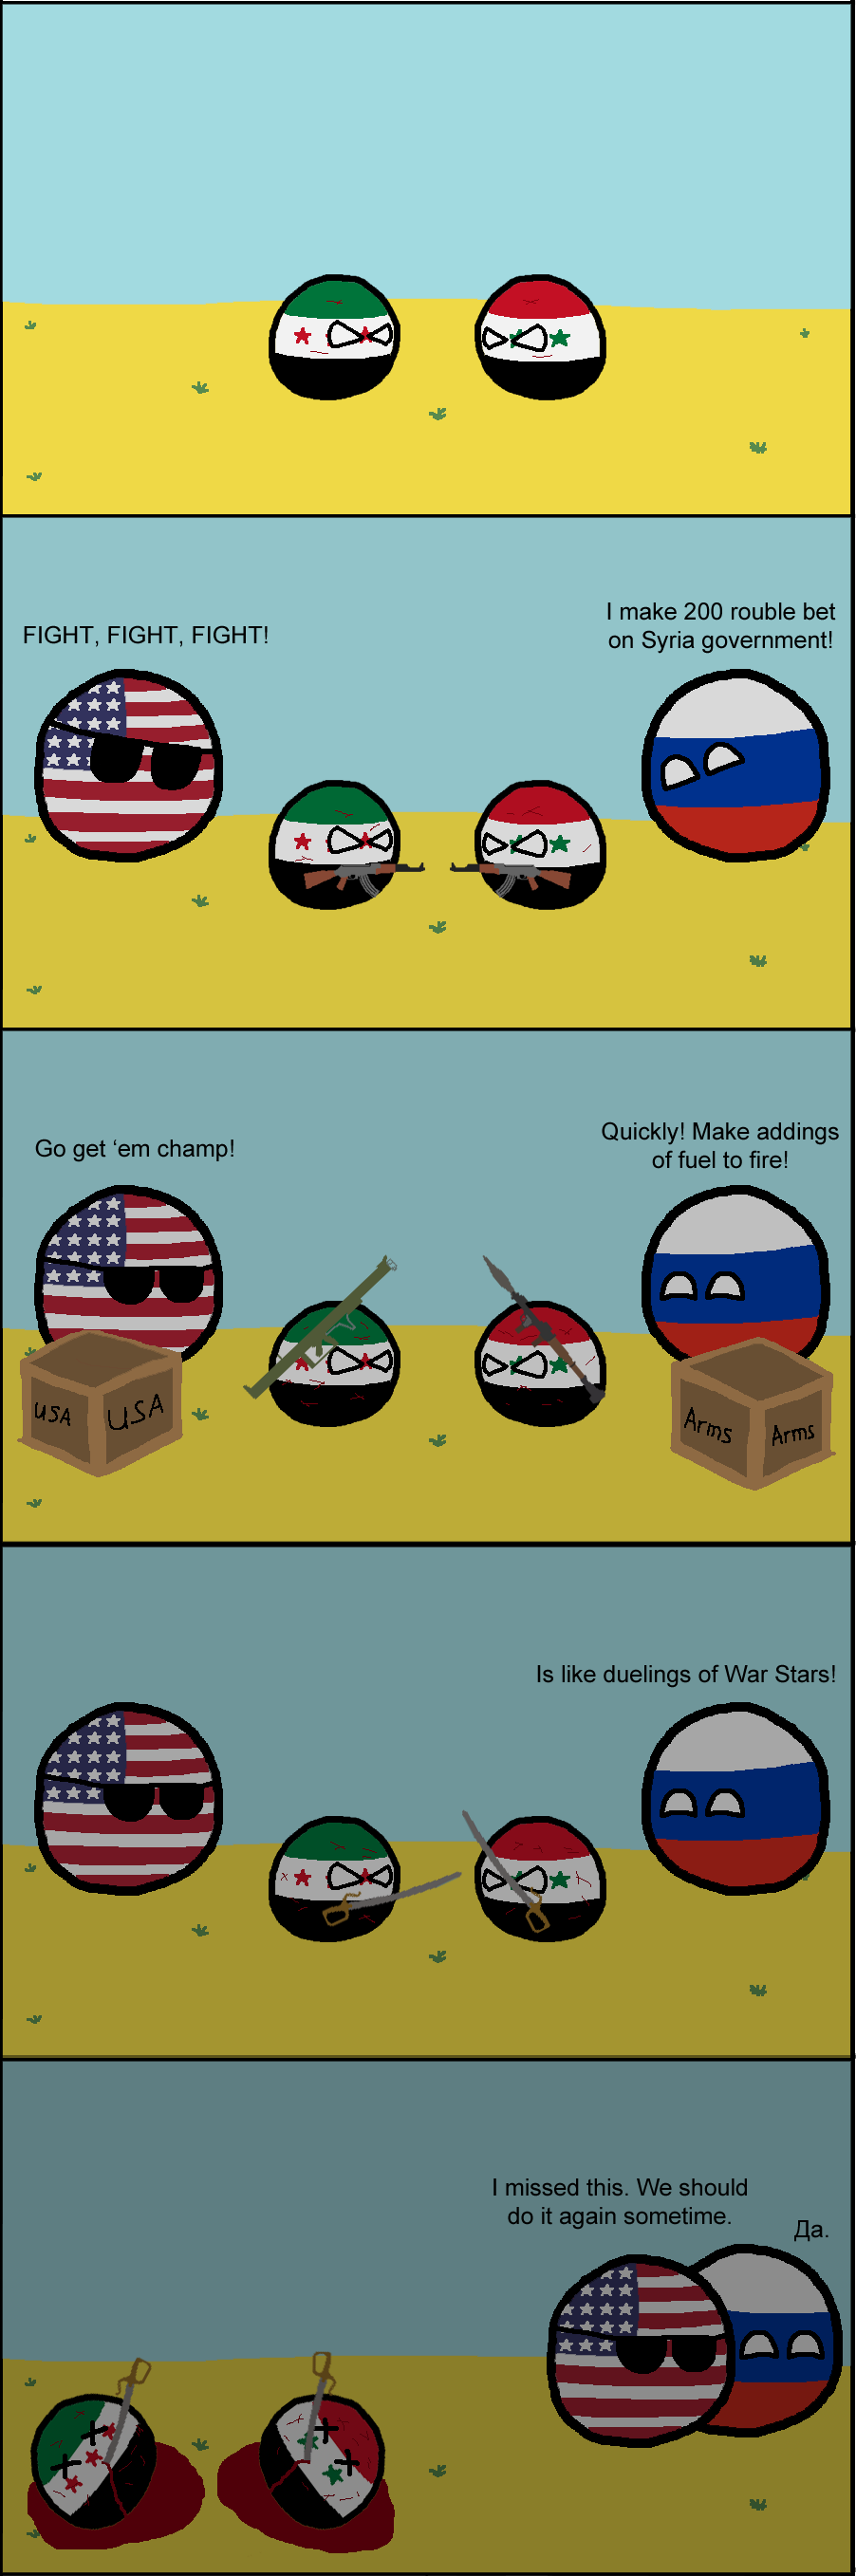 Polandball on the Syrian Civil War